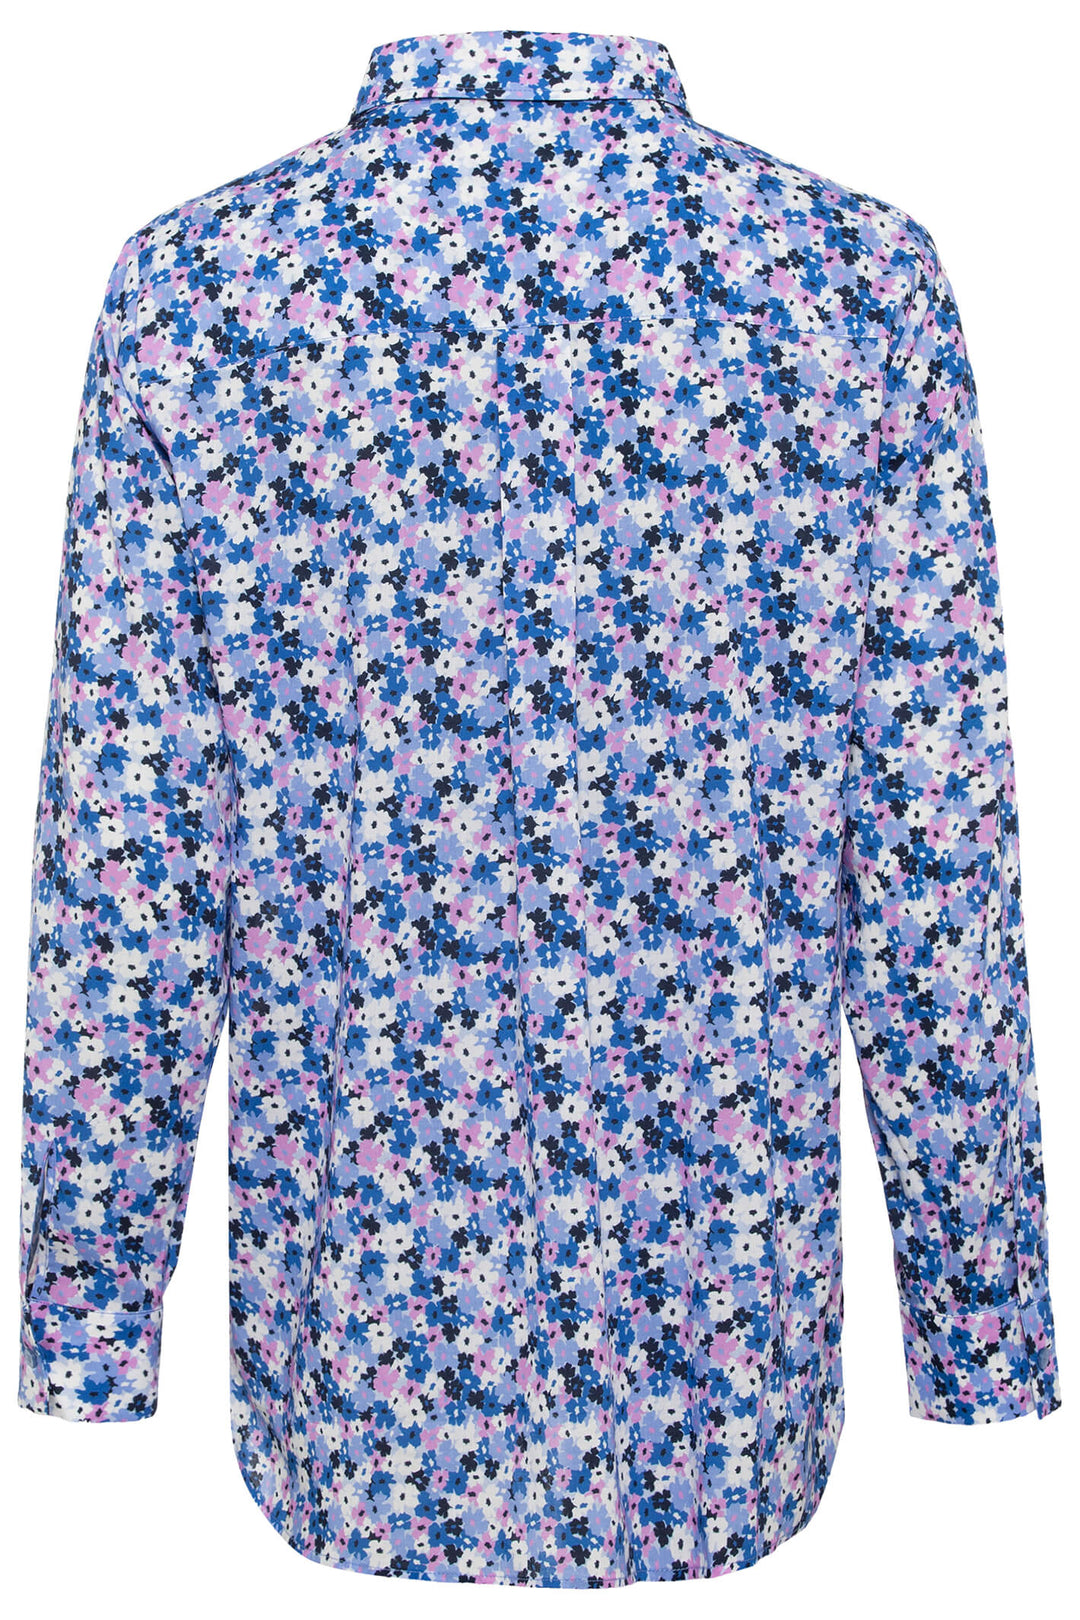 Olsen 12001777 Cornflower Blue Flower Print Shirt - Shirley Allum Boutique